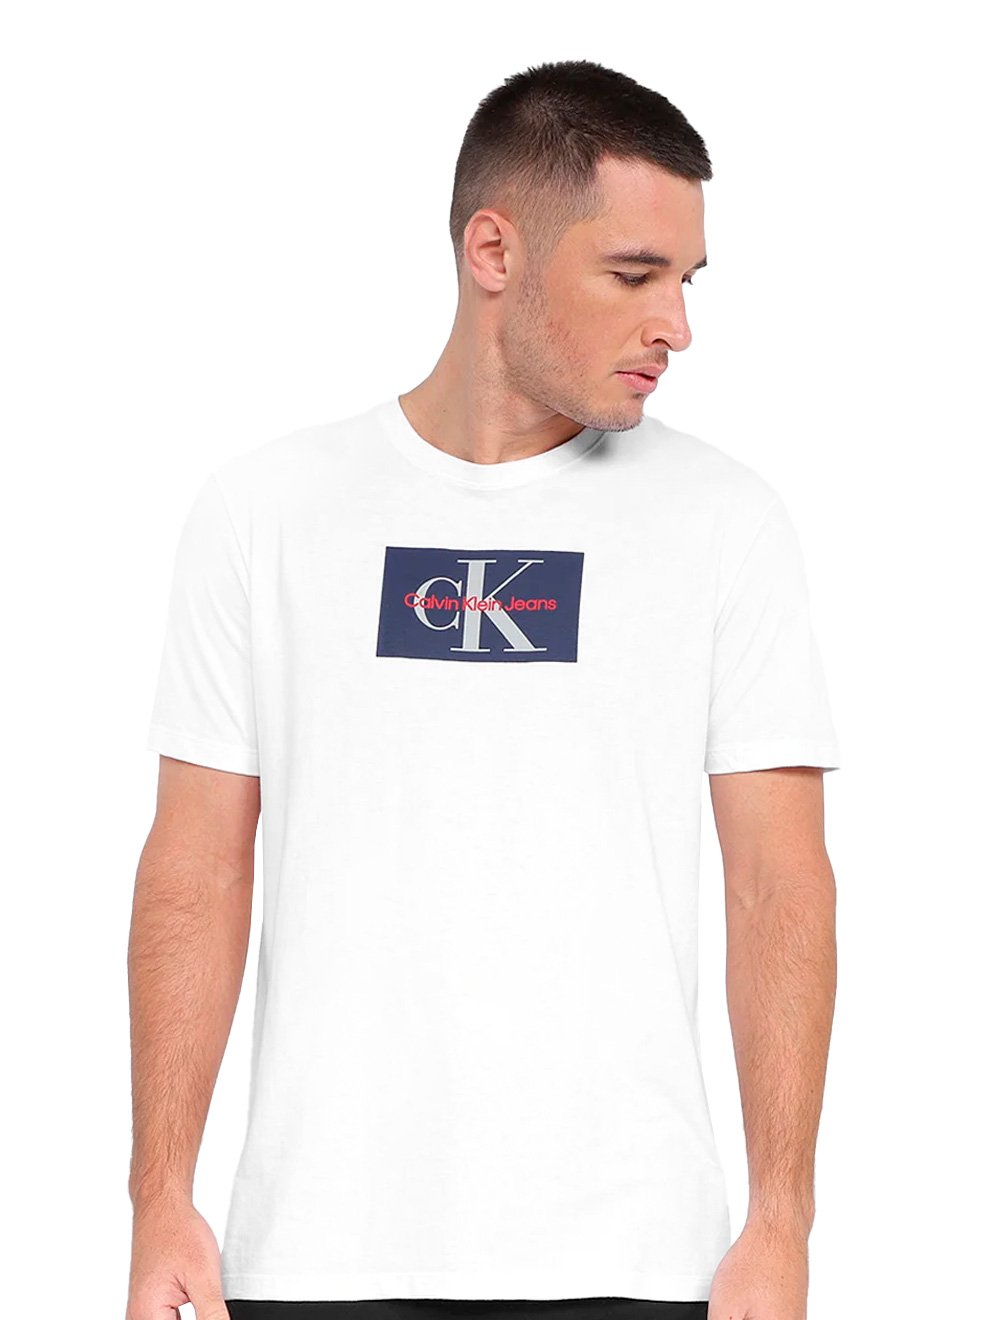 Camiseta Calvin Klein Swimwear Masculina C-Neck Logo Preta - Compre Agora